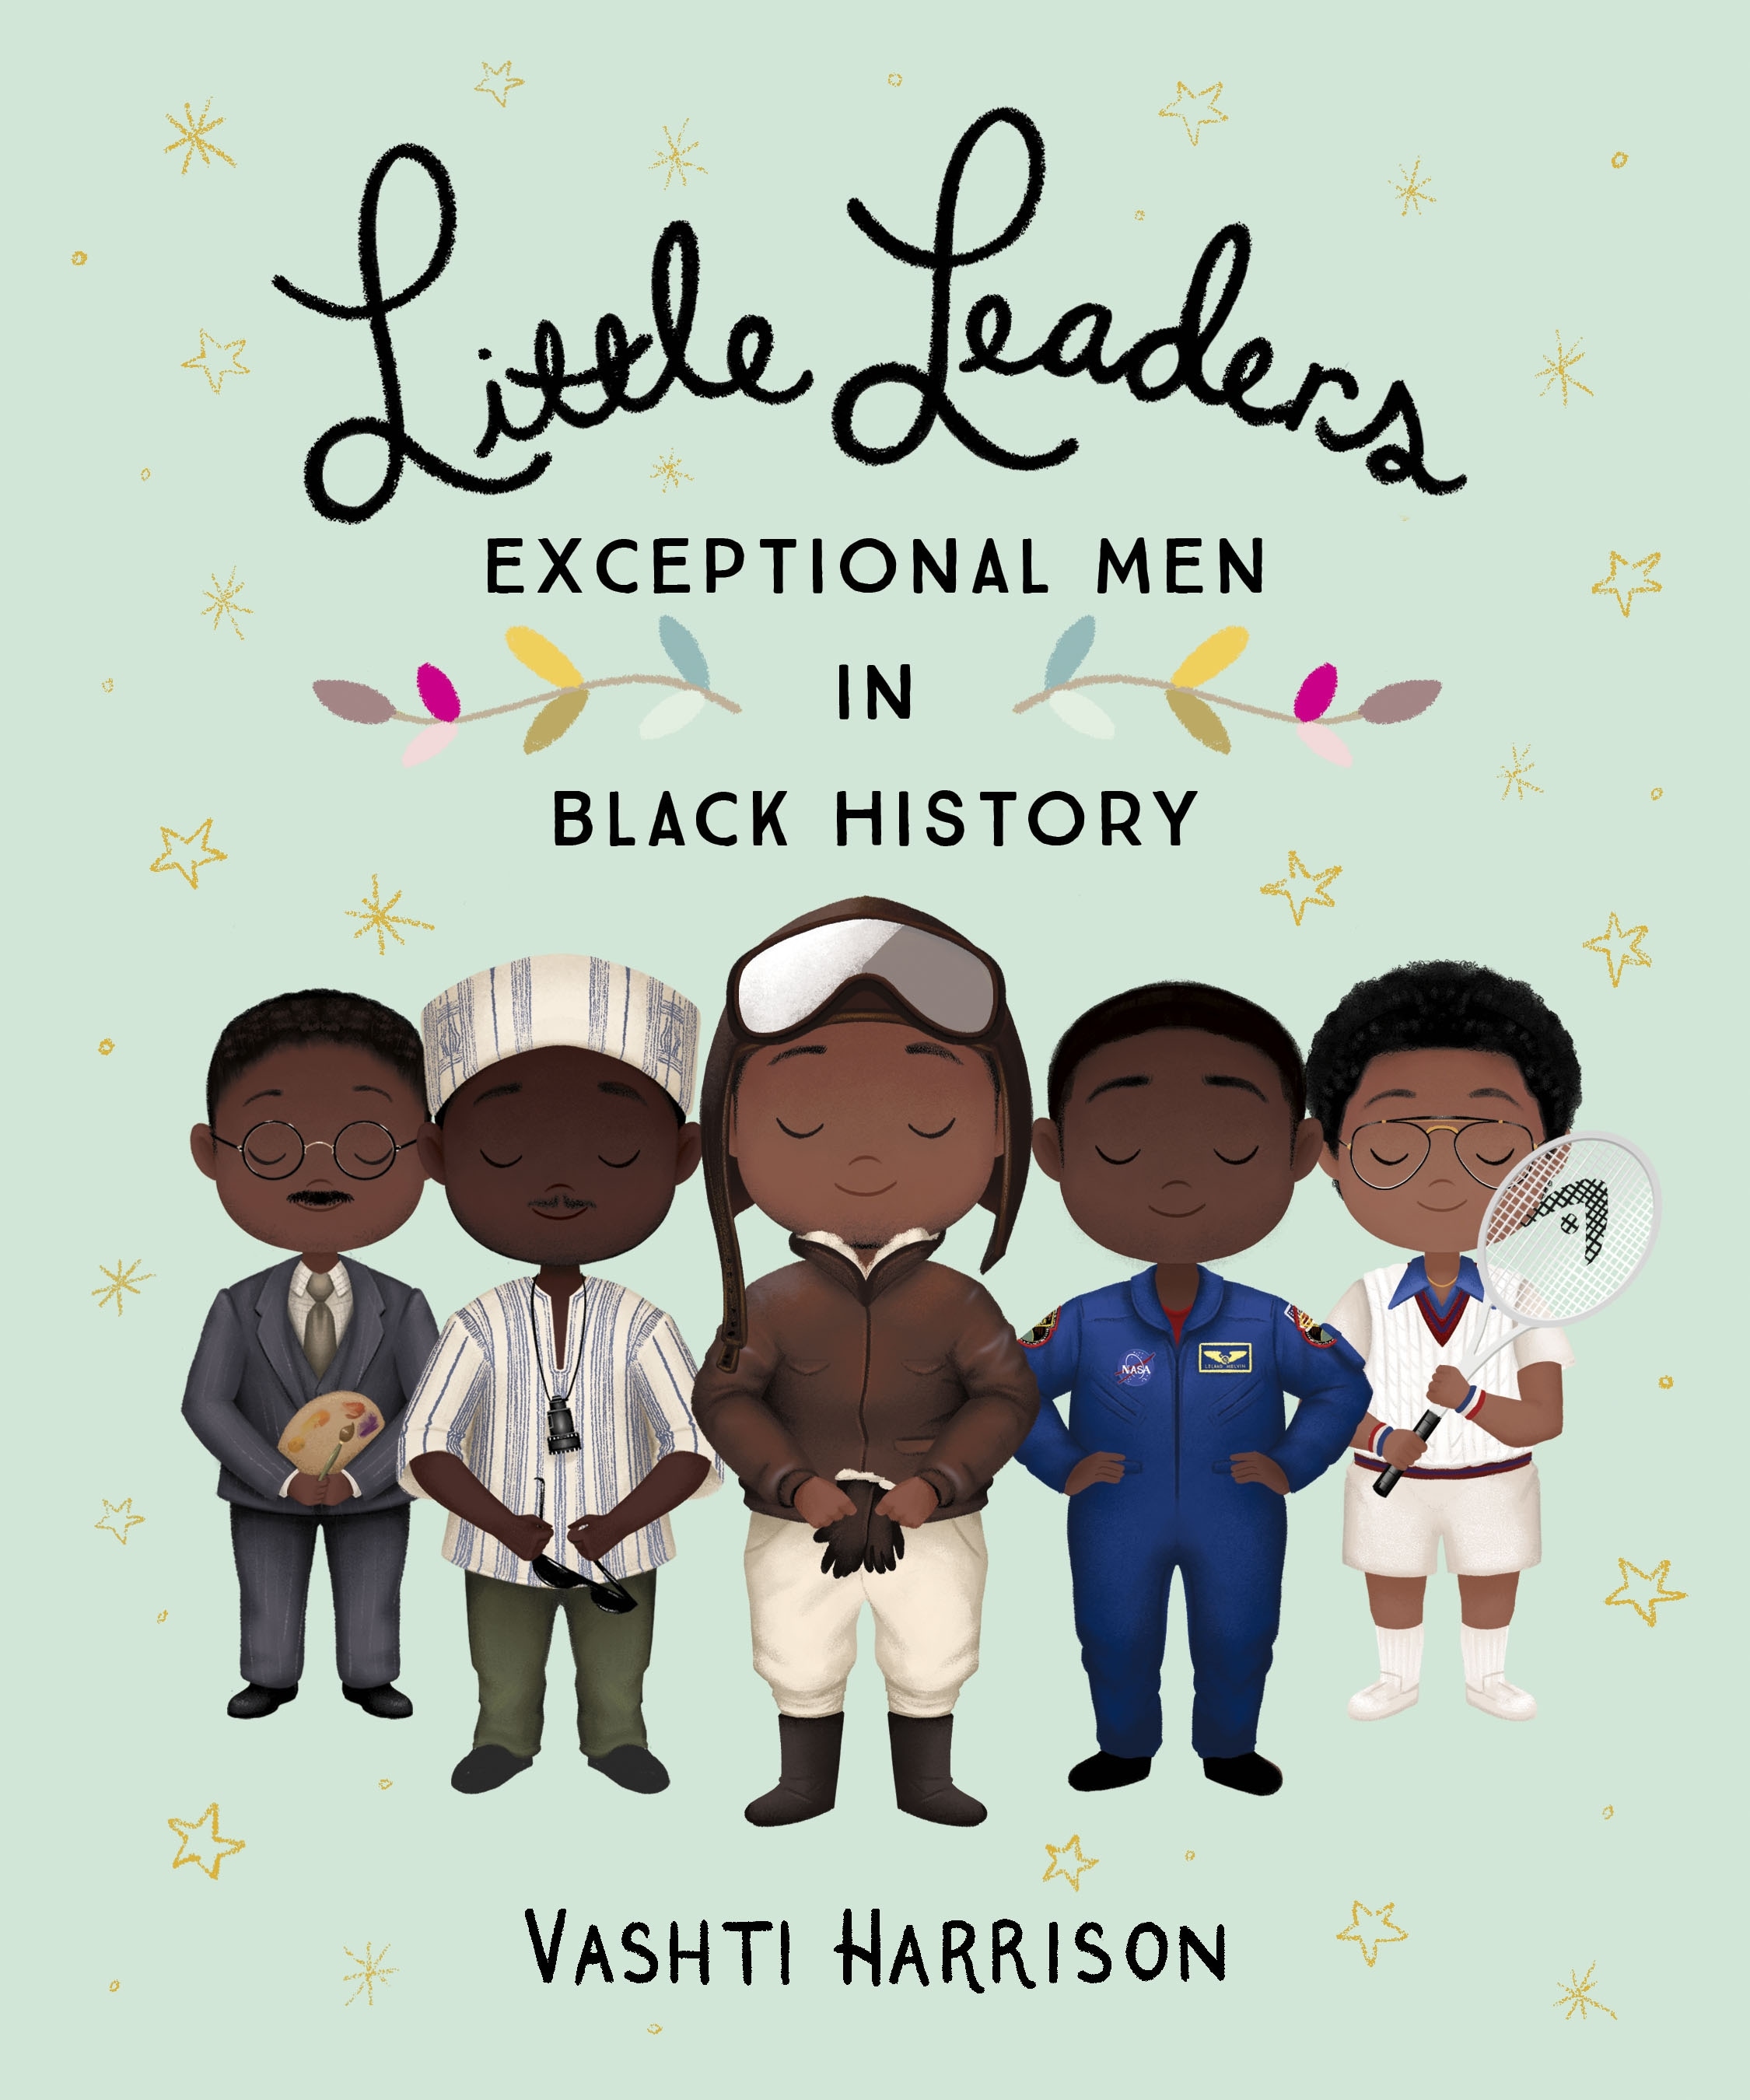 Book “Little Leaders: Exceptional Men in Black History” by Vashti Harrison — April 15, 2021